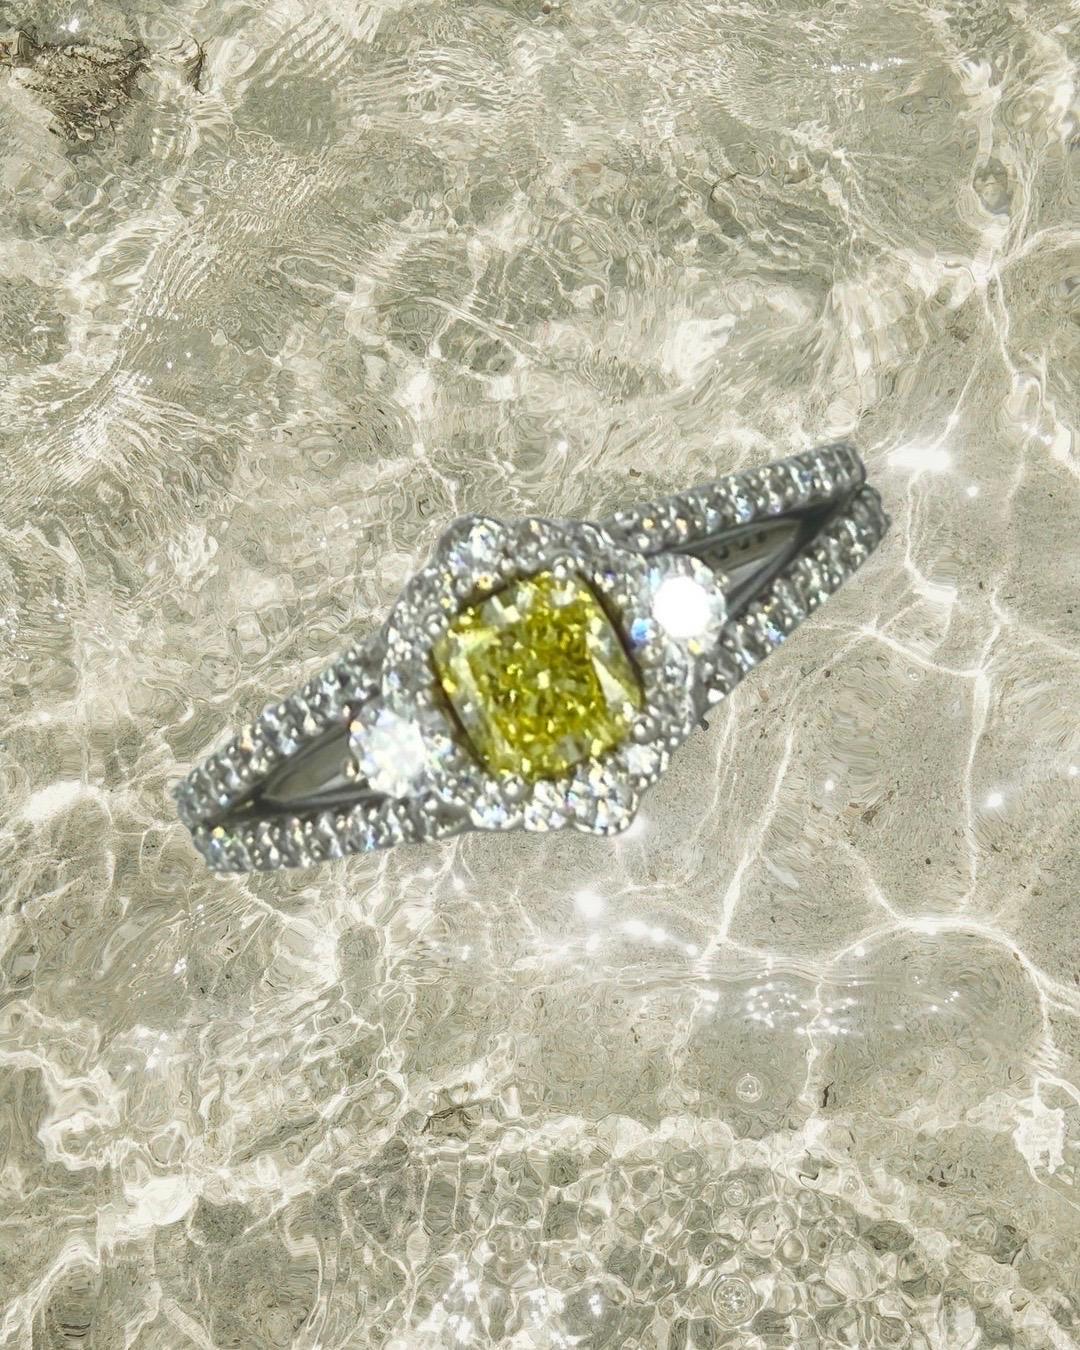 GIA-zertifiziert 0,56 Karat Center Natural Fancy Yellow Intense Diamond Engagement Ring.
GIA-Zertifikat Nr. 15619202
Das Gesamtkarat an Diamanten wiegt 1,15 Karat.
Der Ring verfügt über eine sehr seltene Intense Yellow fancy color Diamant Zentrum